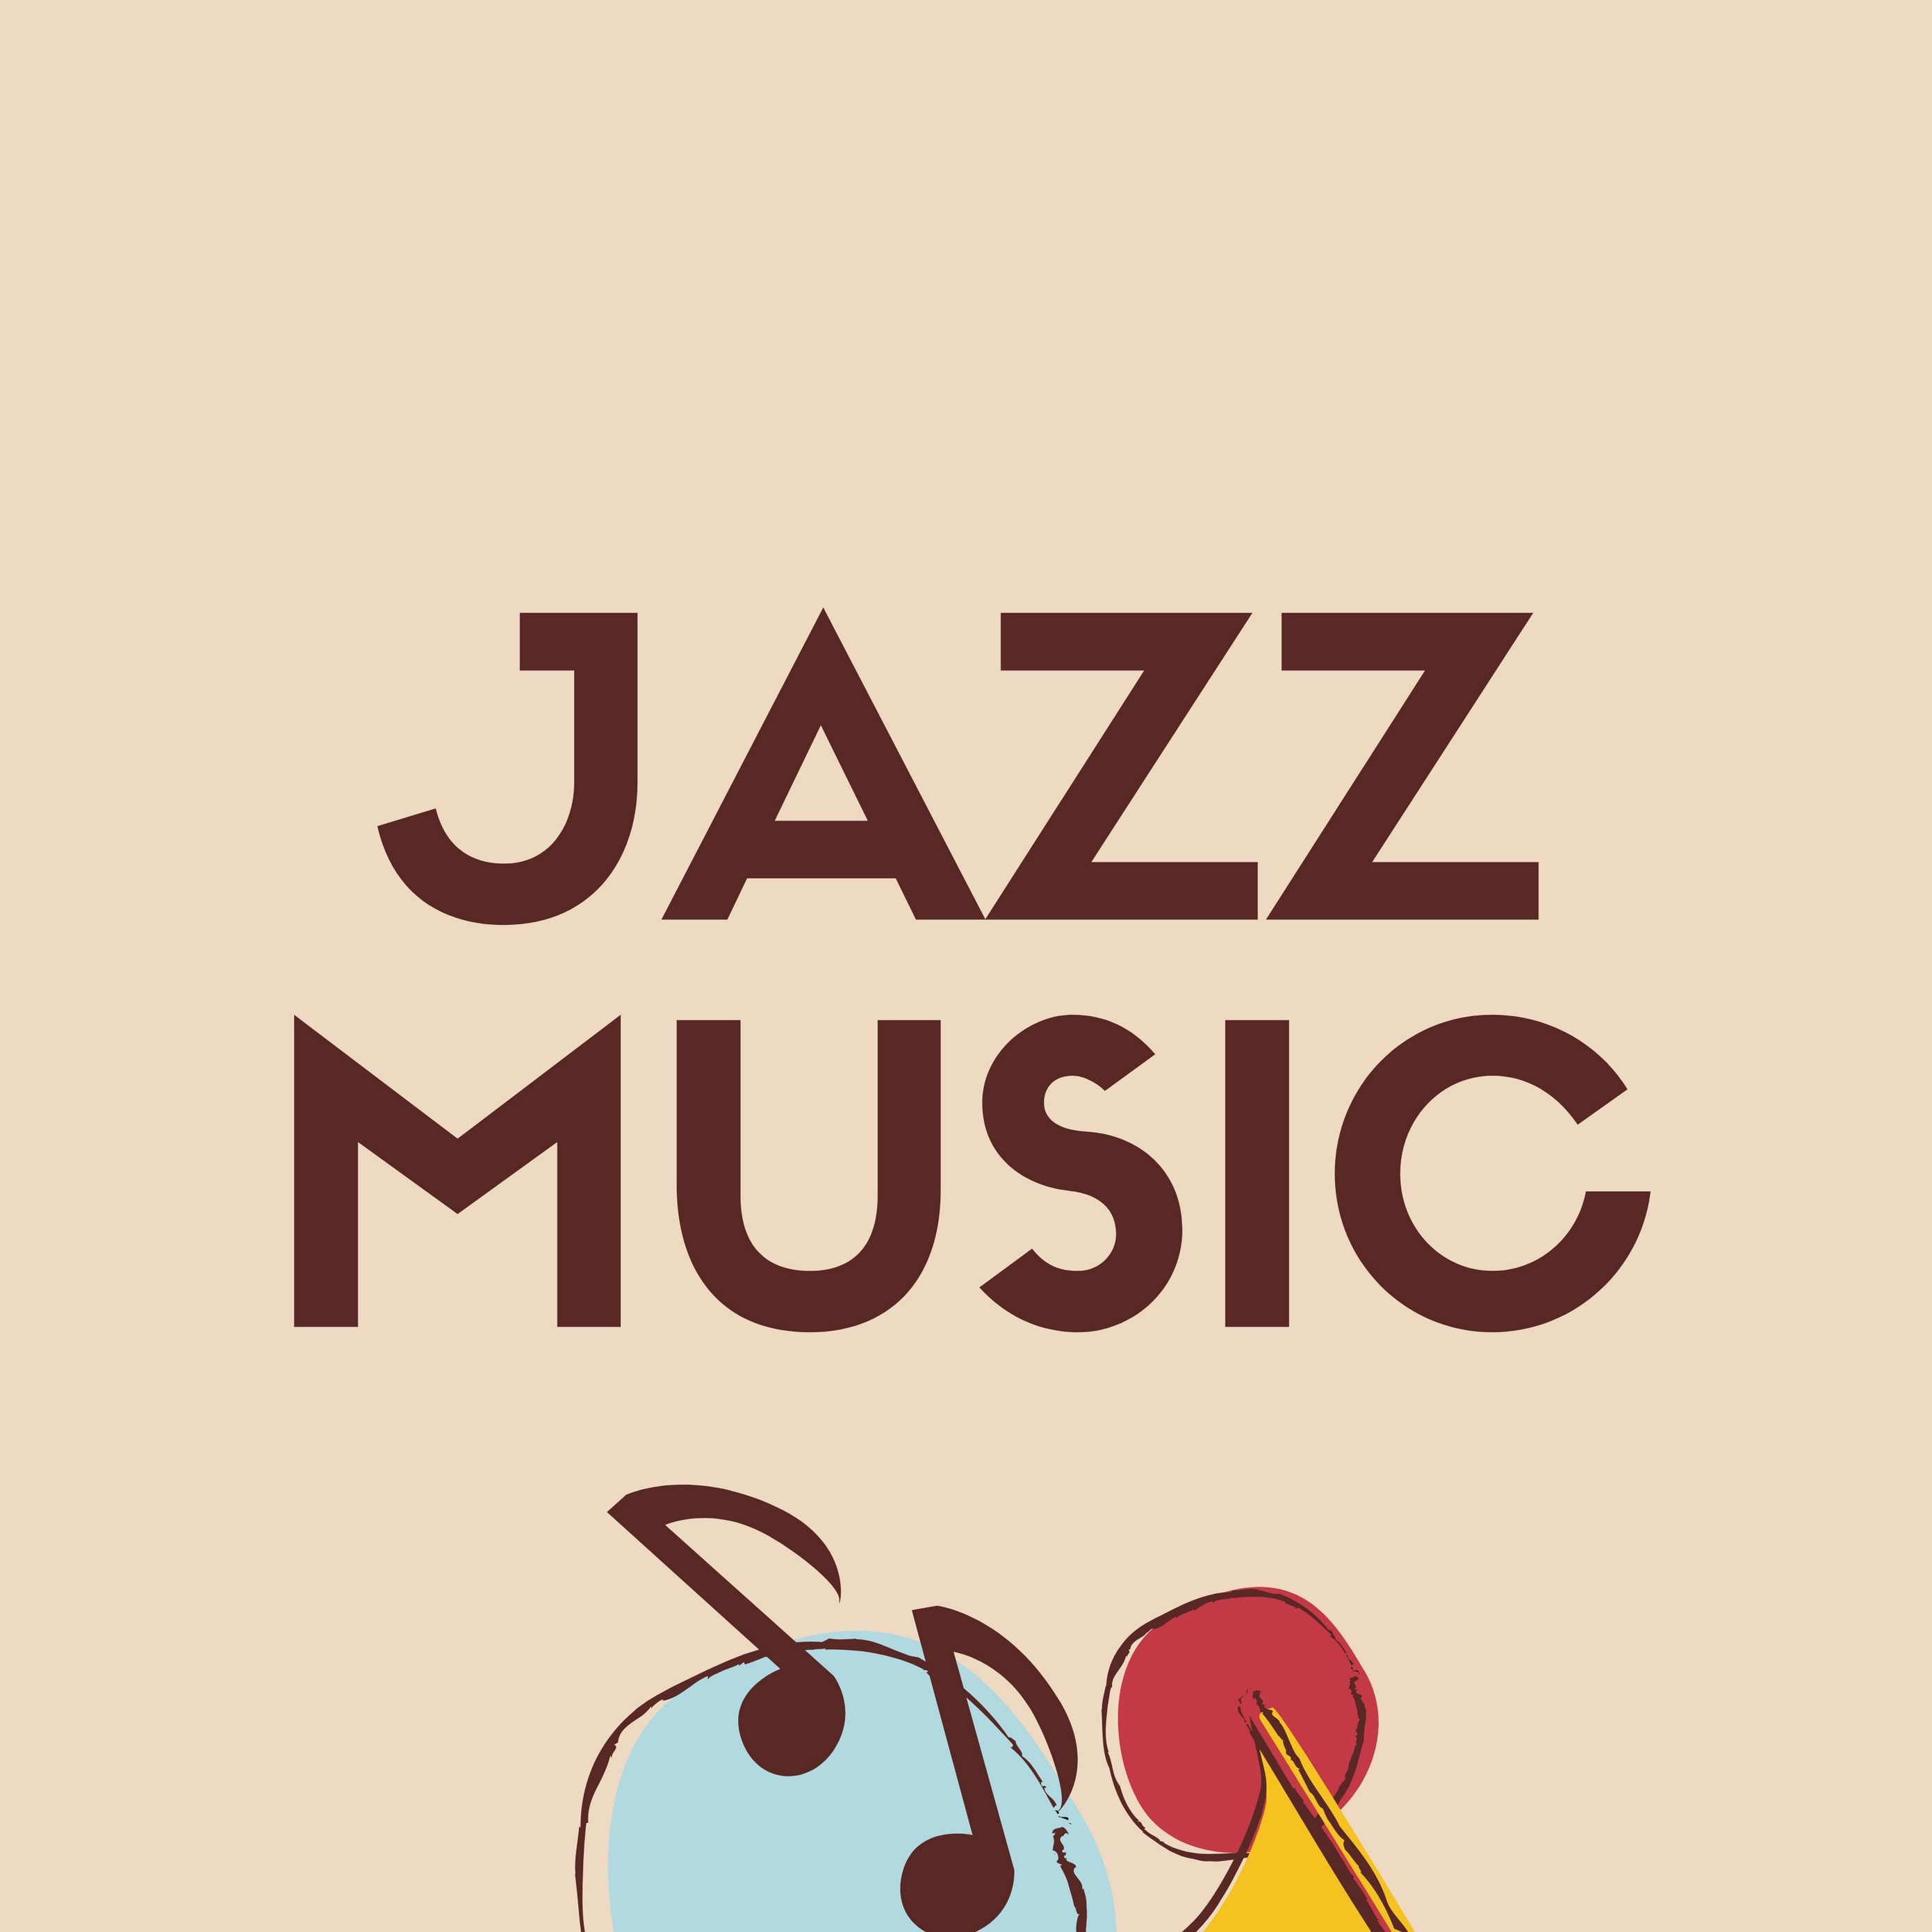 Download wallpaper 2780x2780 jazz, music, musical instrument ipad